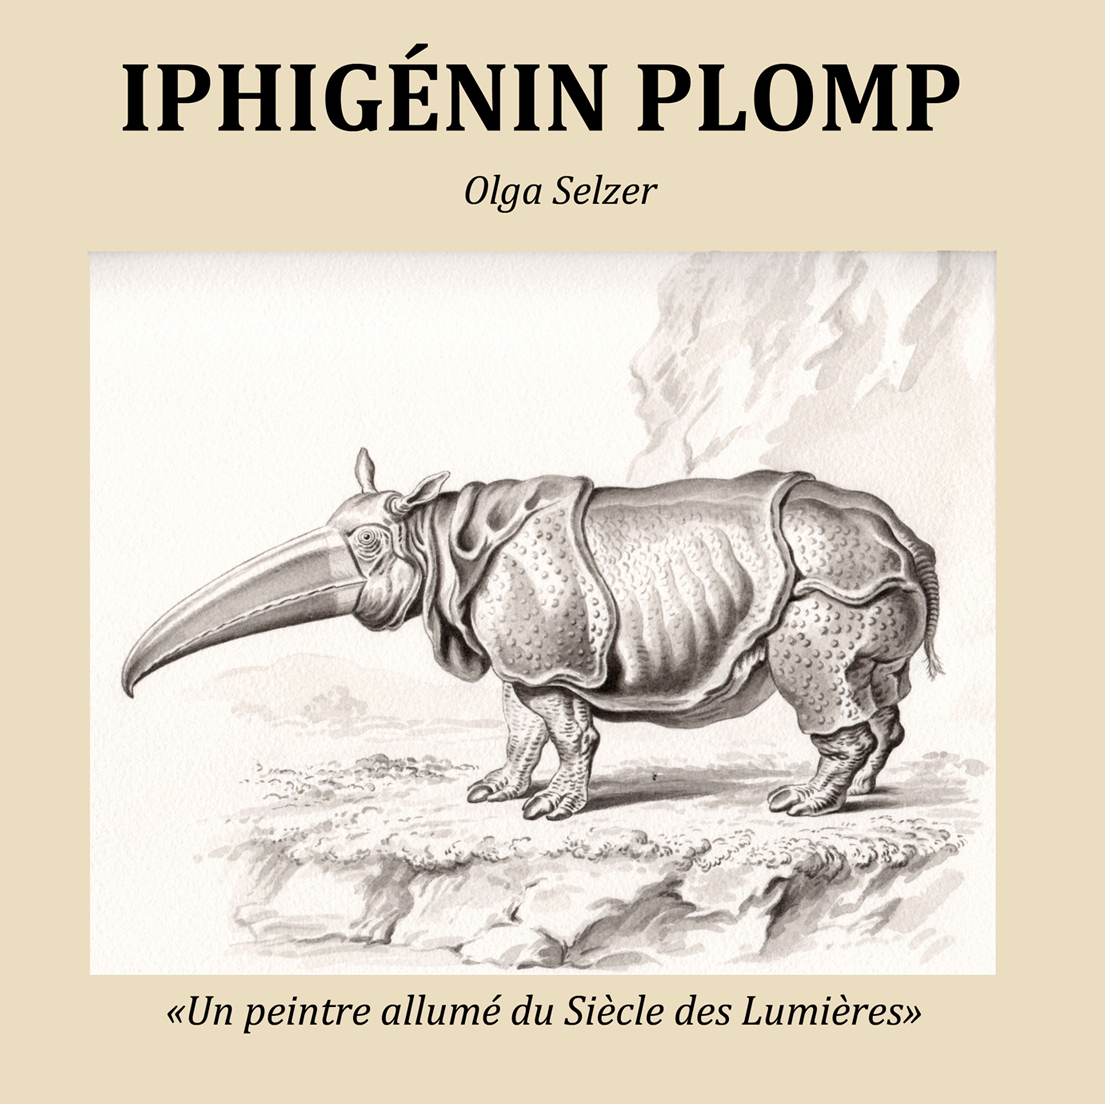 Iphigénin Plomp